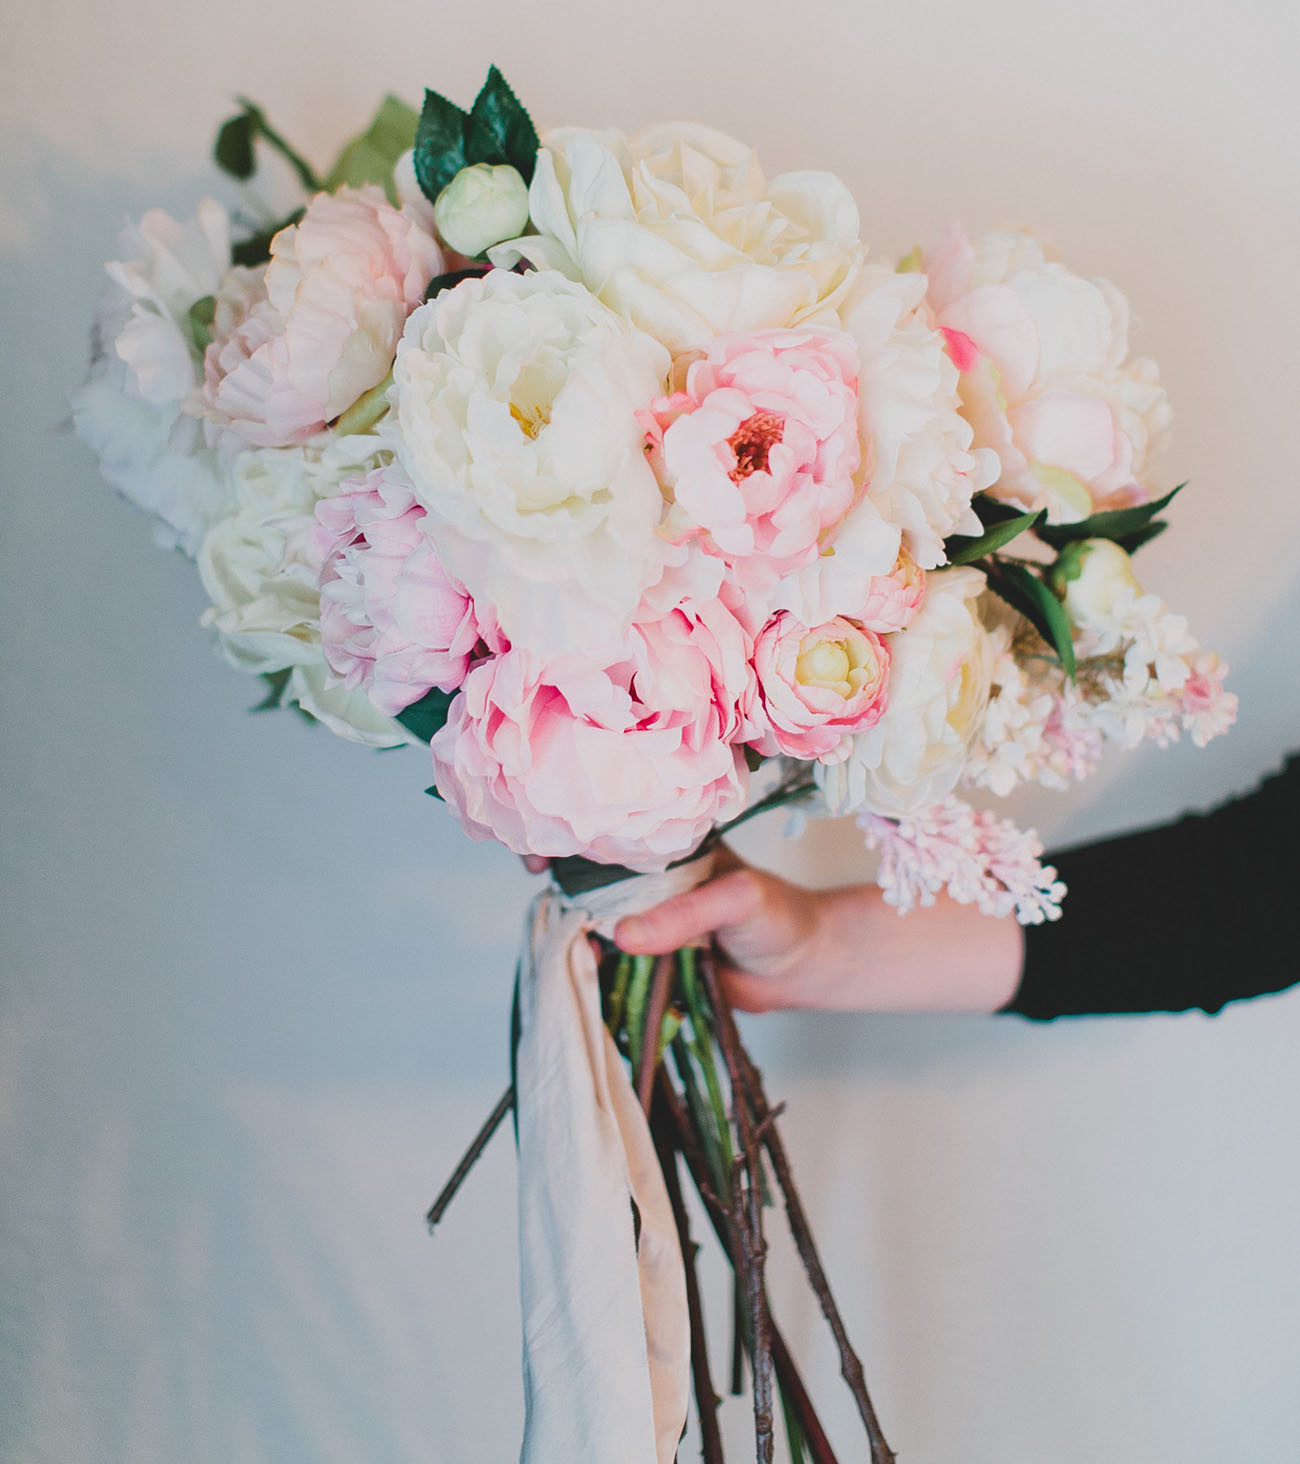 DIY Wedding Bouquet Silk Flowers
 DIY Silk Flower Bouquet with Afloral Green Wedding Shoes